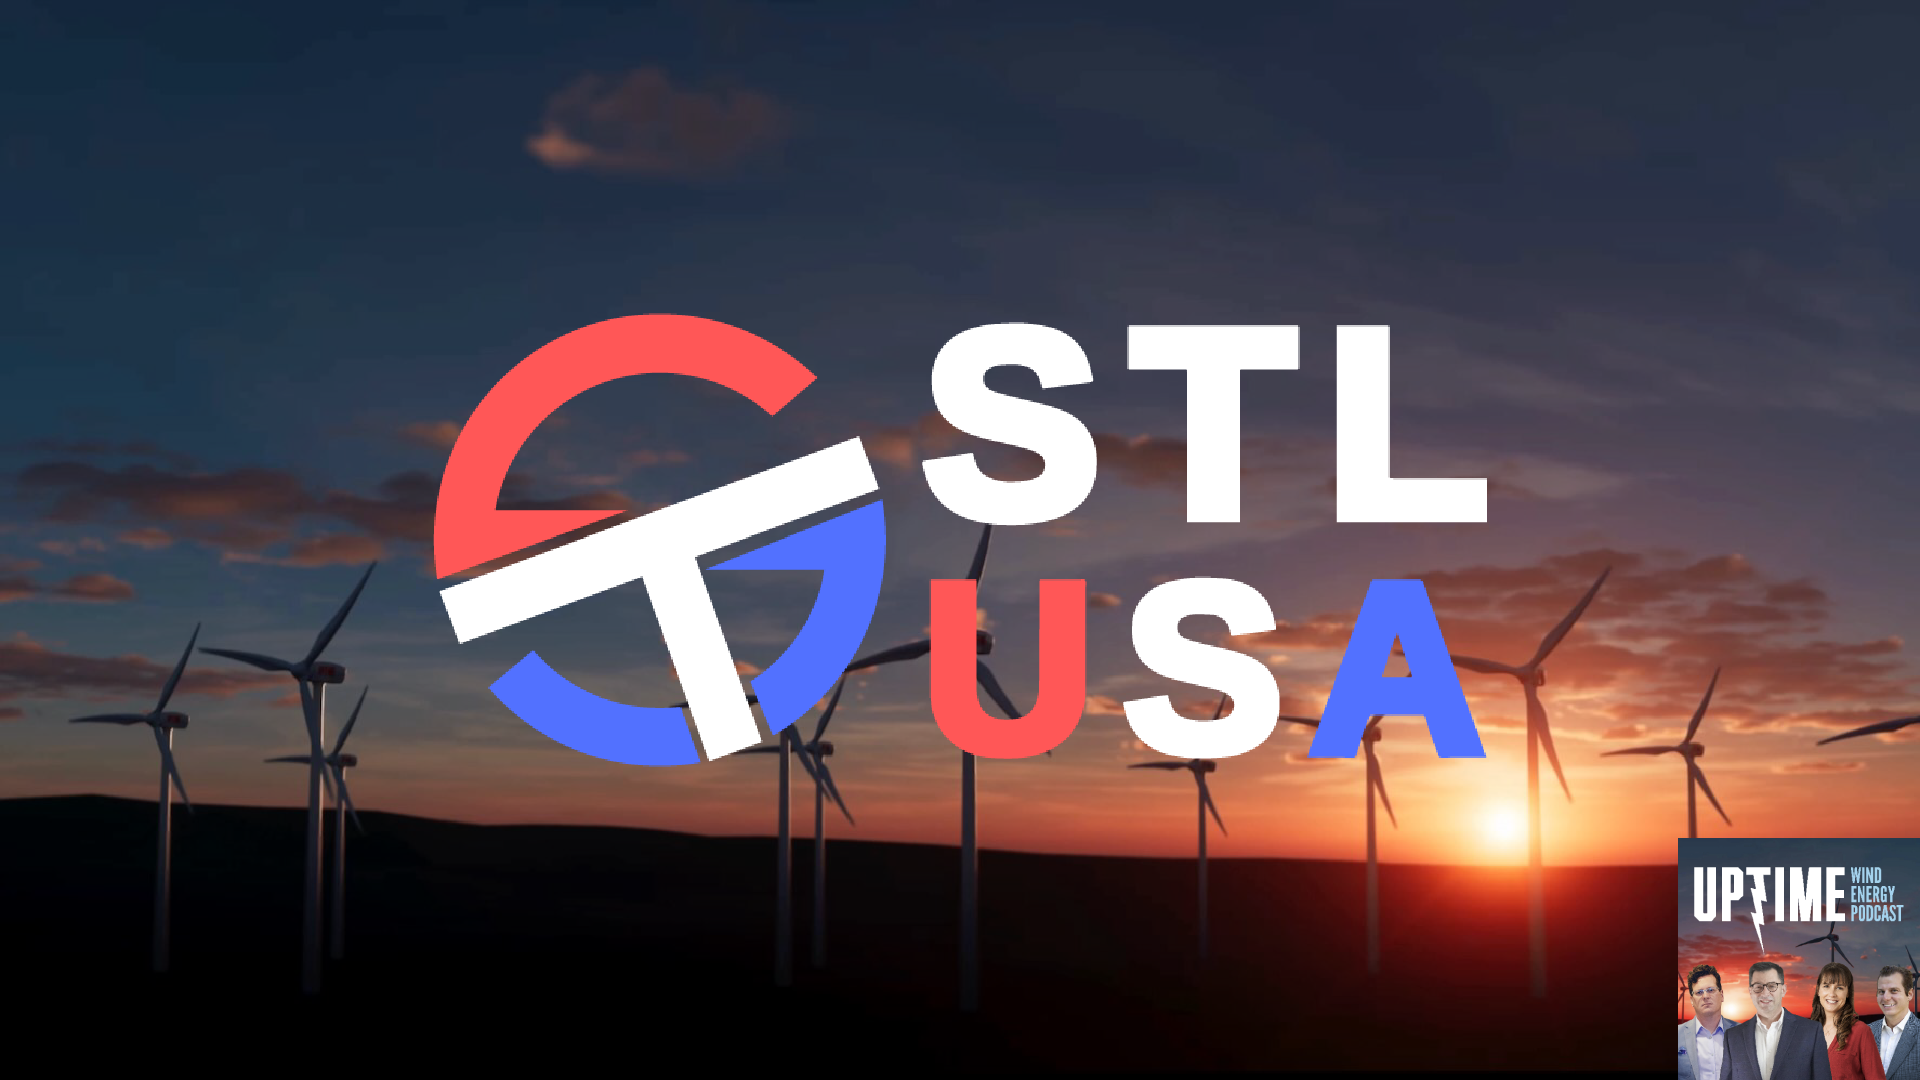 STL WindStart: Tackling The Wind Technician Shortage